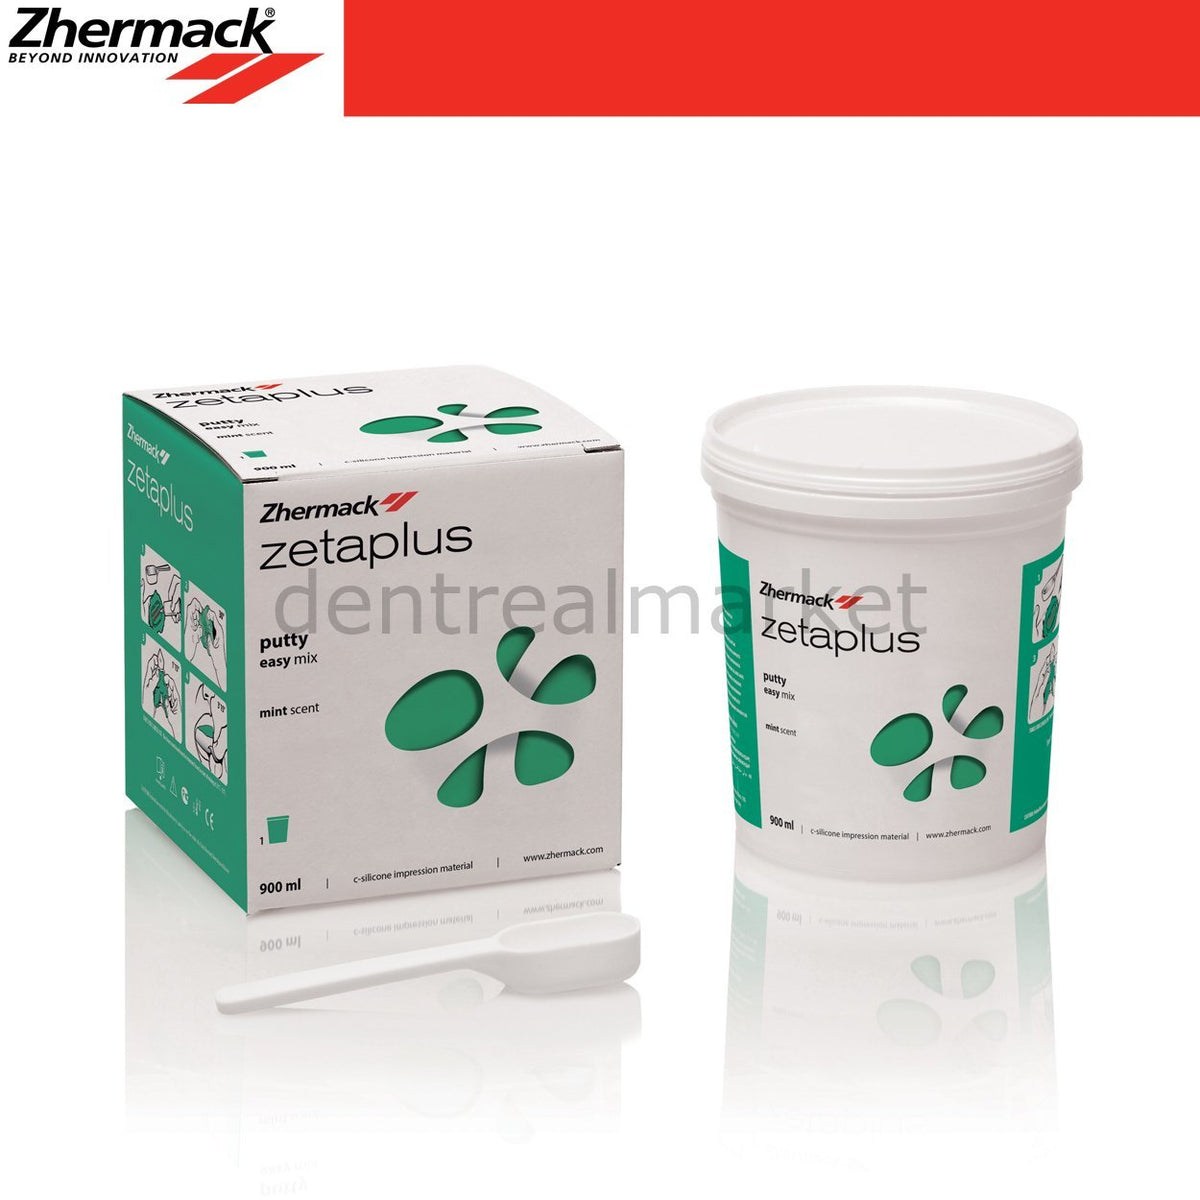 DentrealStore - Zhermack Zetaplus C Silicone Impression Material- Intro kit